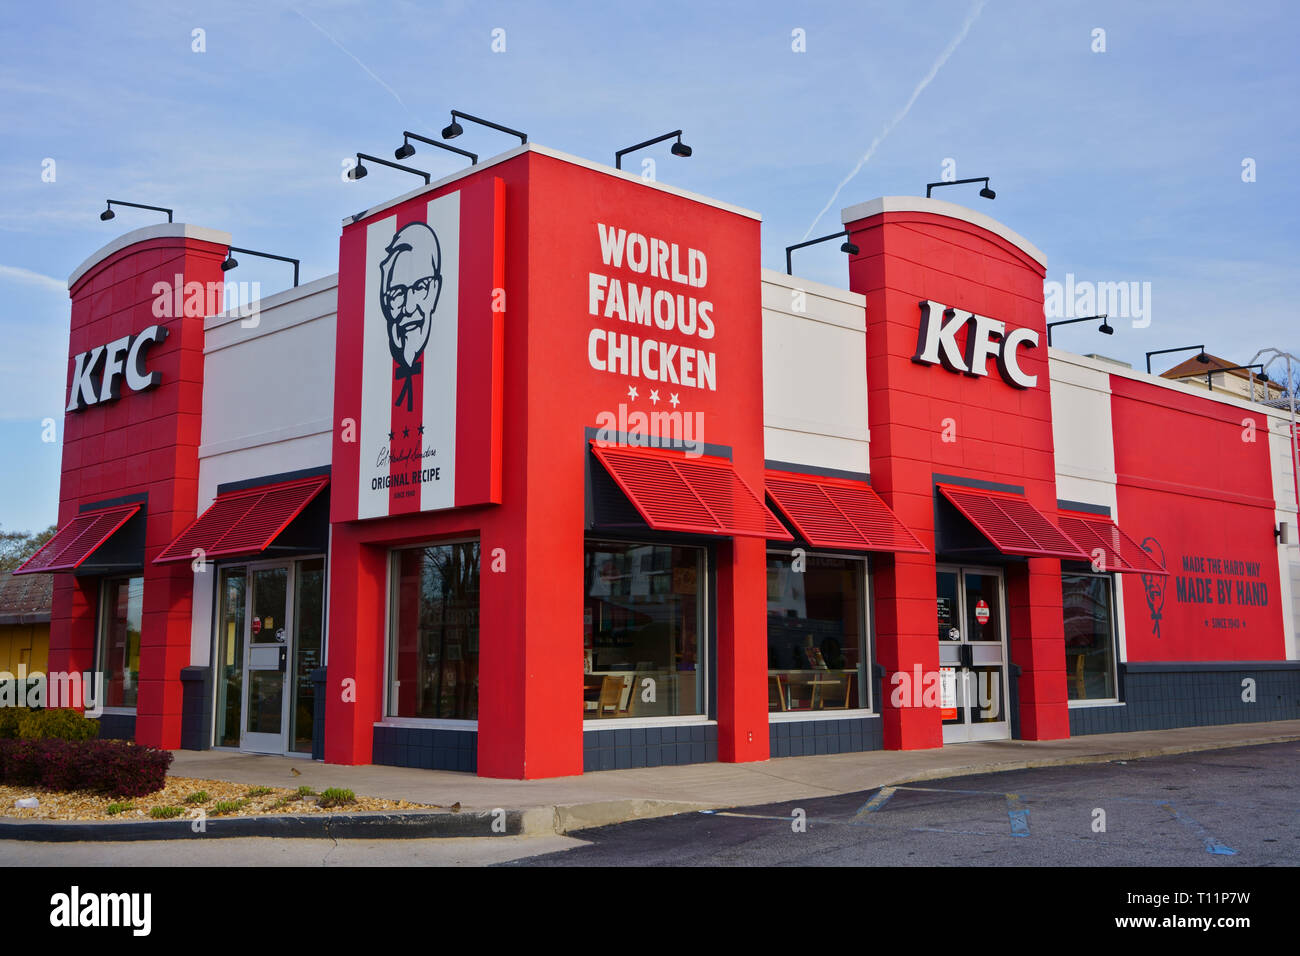 ATLANTA, GEORGIA, USA - MARCH 19, 2019: KFC Kentucky Fried Chicken fast food restaurant. American restaurant chain, specializing in fried chicken. Stock Photo